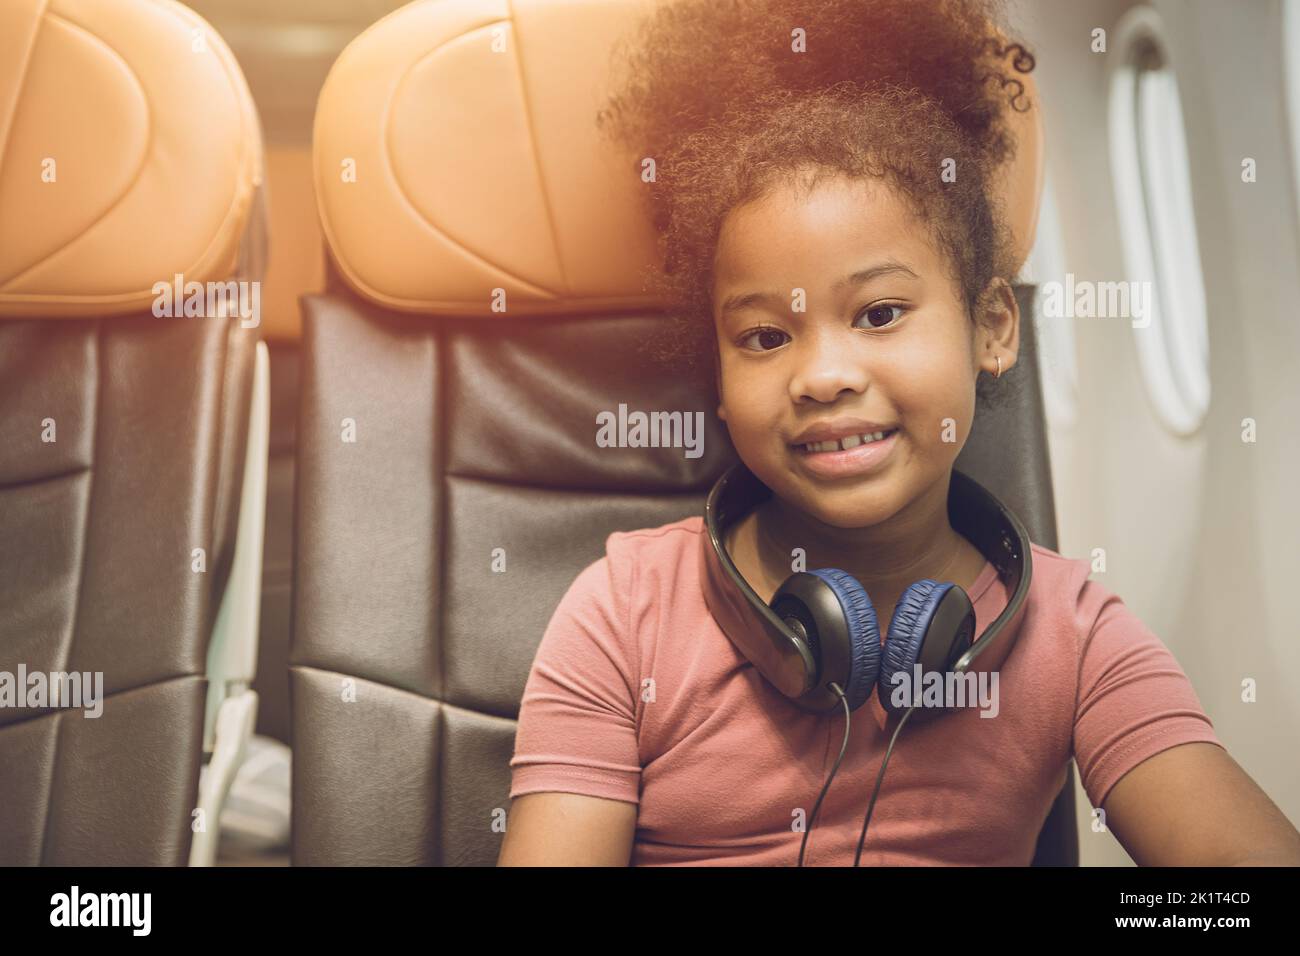 children traveling alone or unaccompanied minor. child girl fly travel sitting alone in flight cabin seat happy smile. Stock Photo